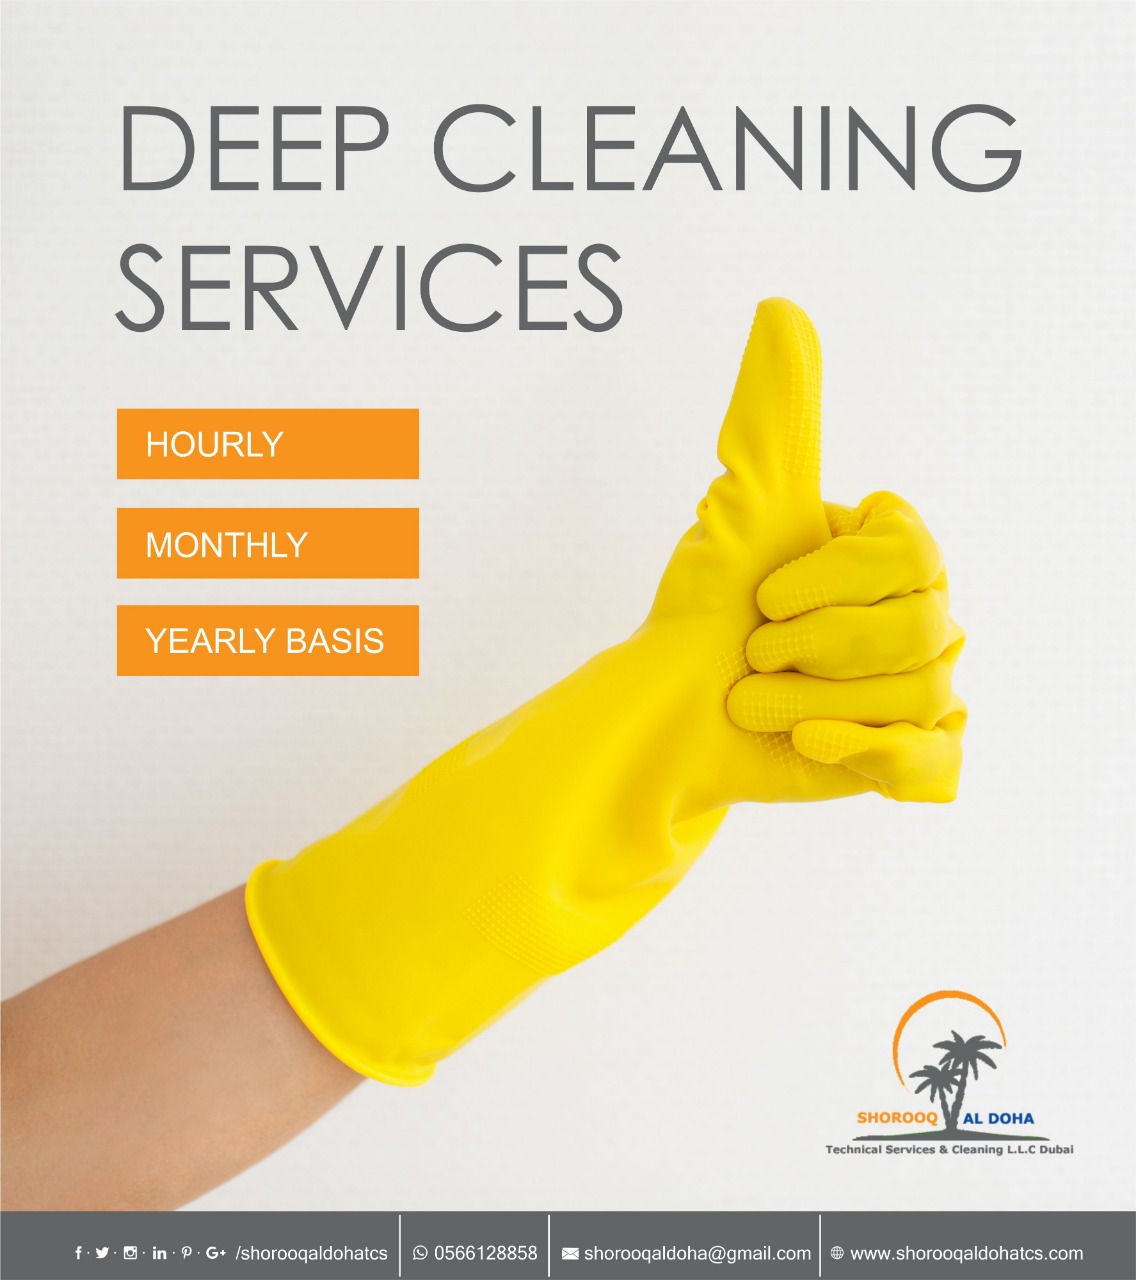 Shorooq al doha cleaning services llc dubai